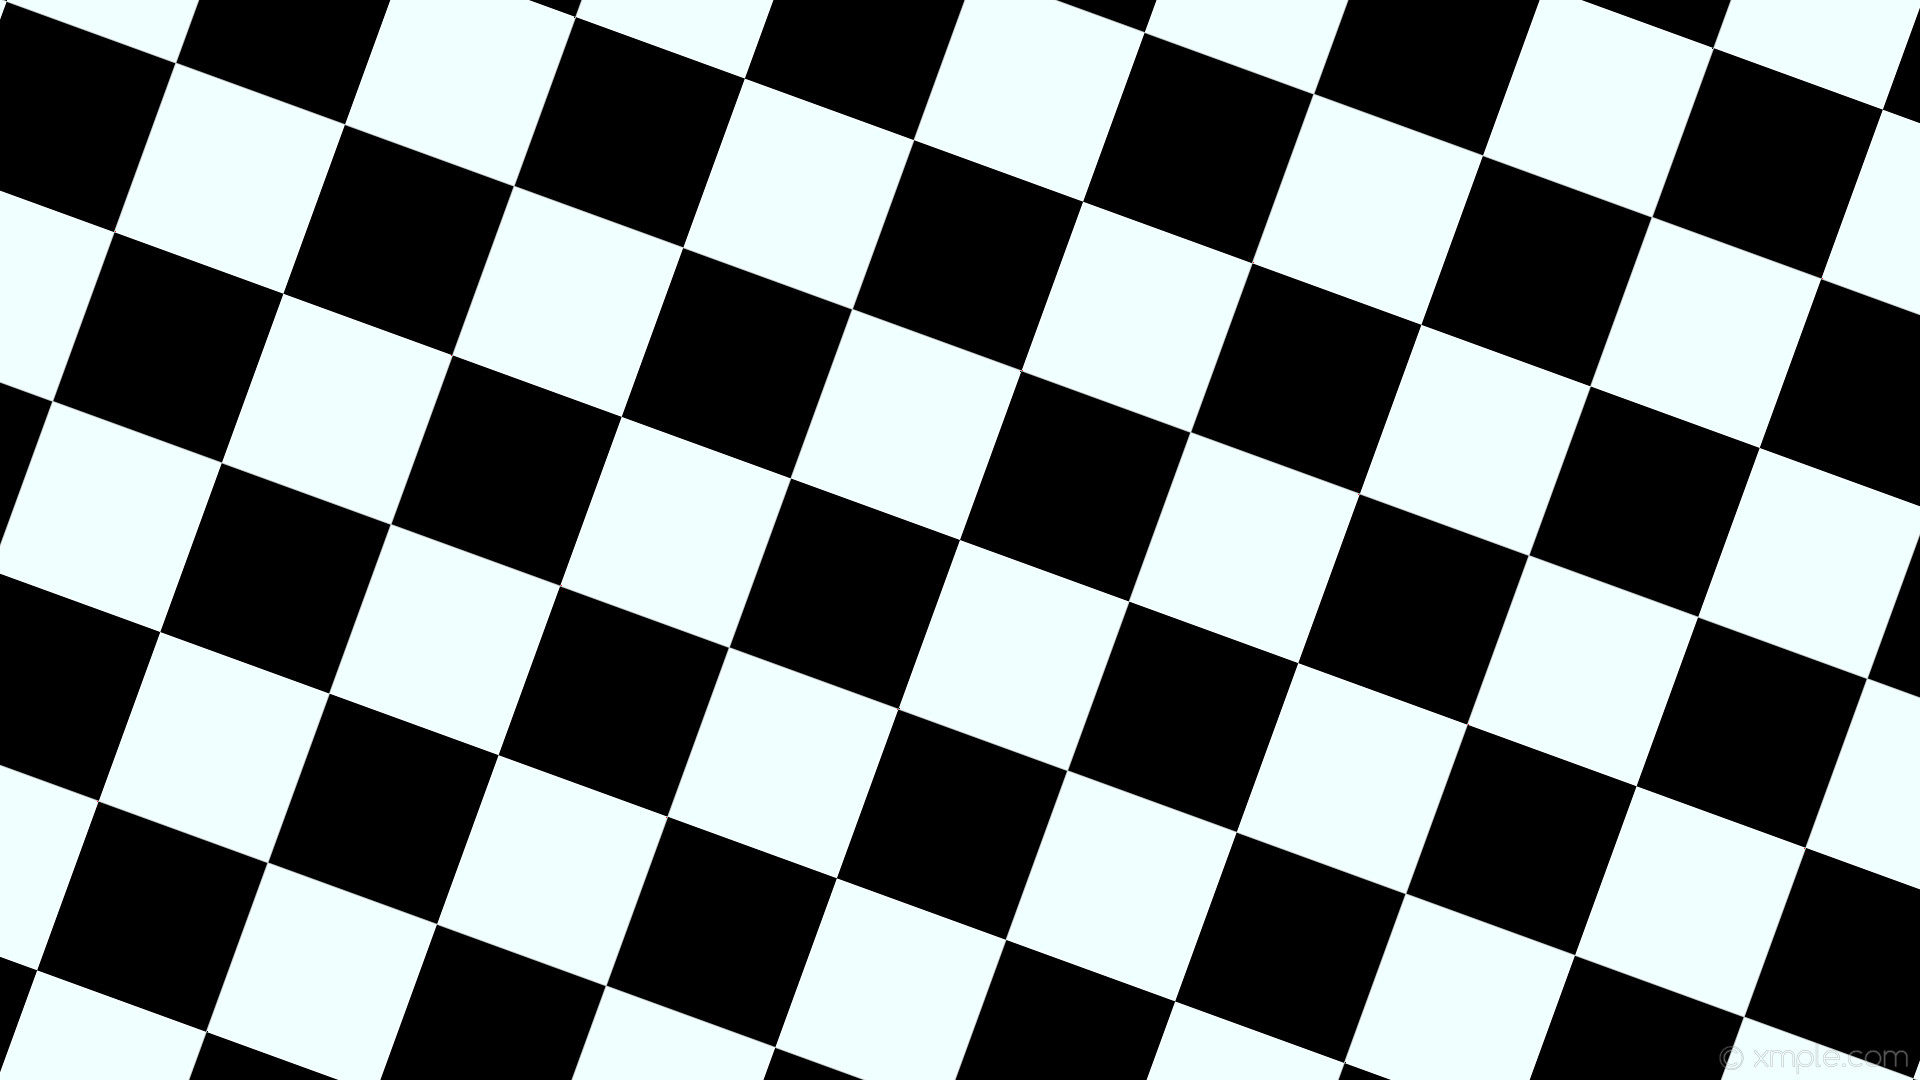 1920x1080 wallpaper black white checkered squares azure #000000 #f0ffff diagonal 70Â°  180px